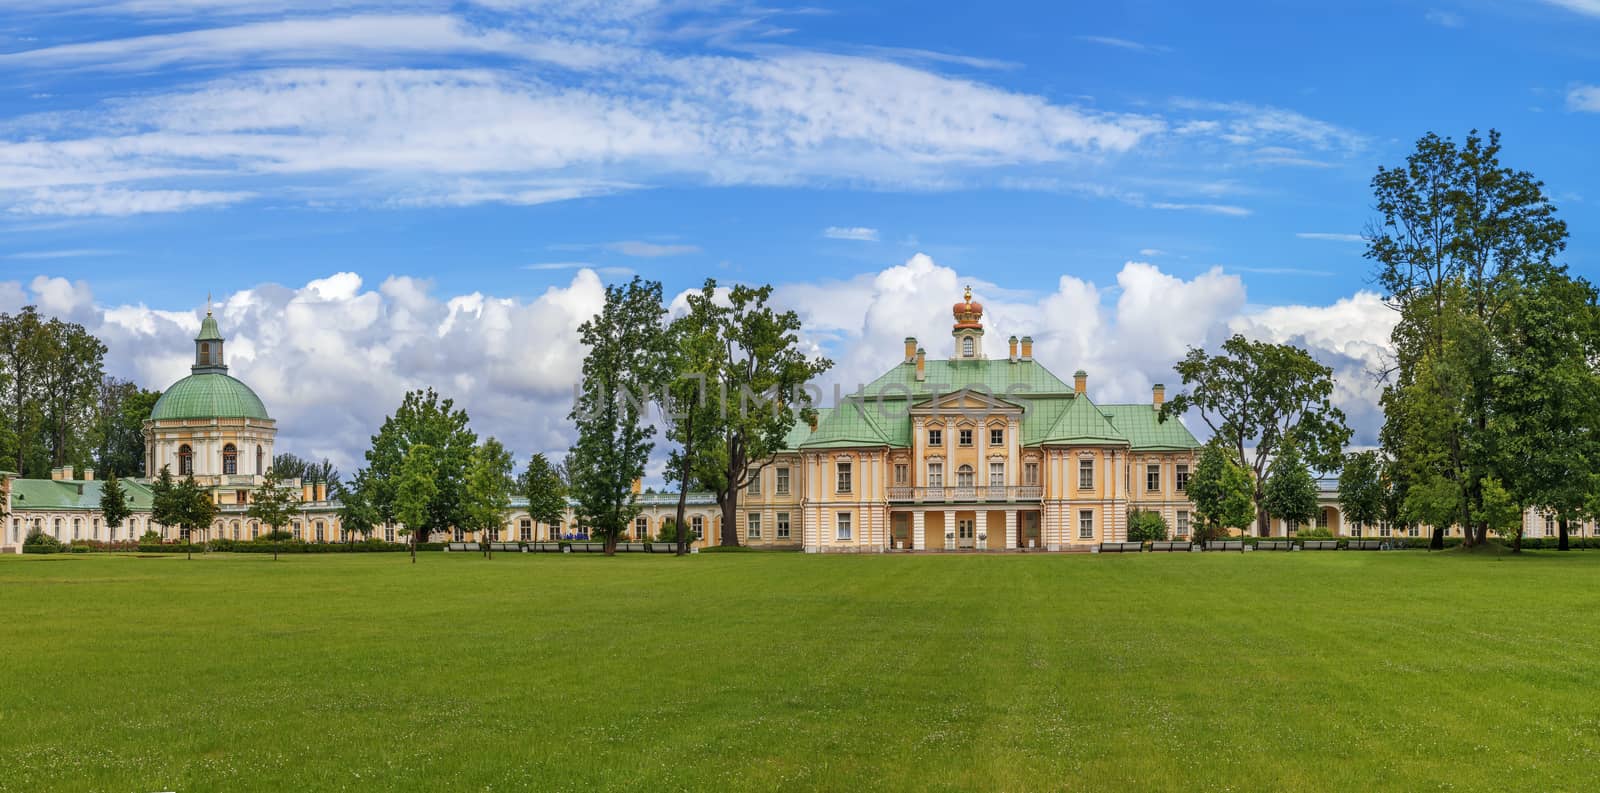 Grand Menshikov Palace, Oranienbaum, Russia by borisb17